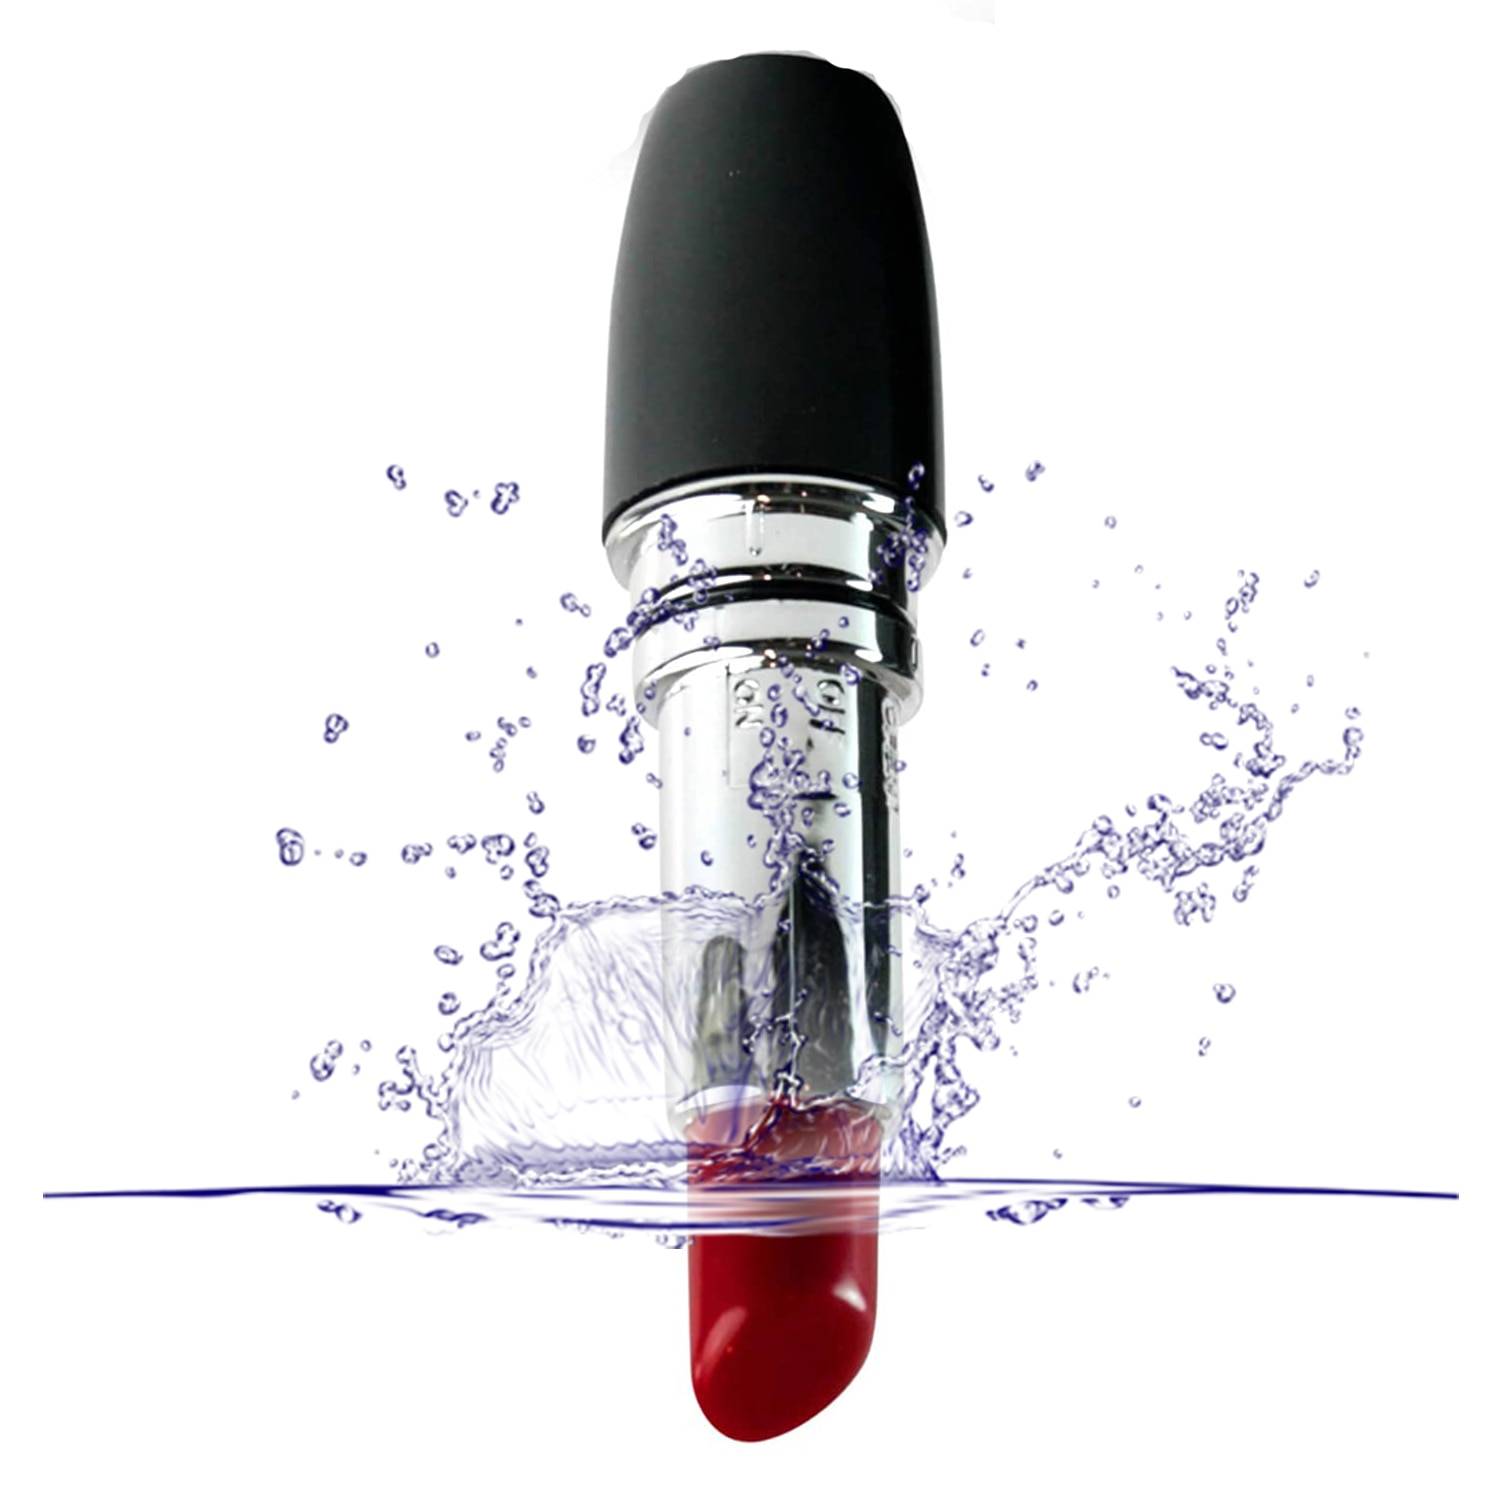 Lipstick Design Vibrator Adult Products cb5feb1b7314637725a2e7: Black|Pink|Purple|Red|Silver